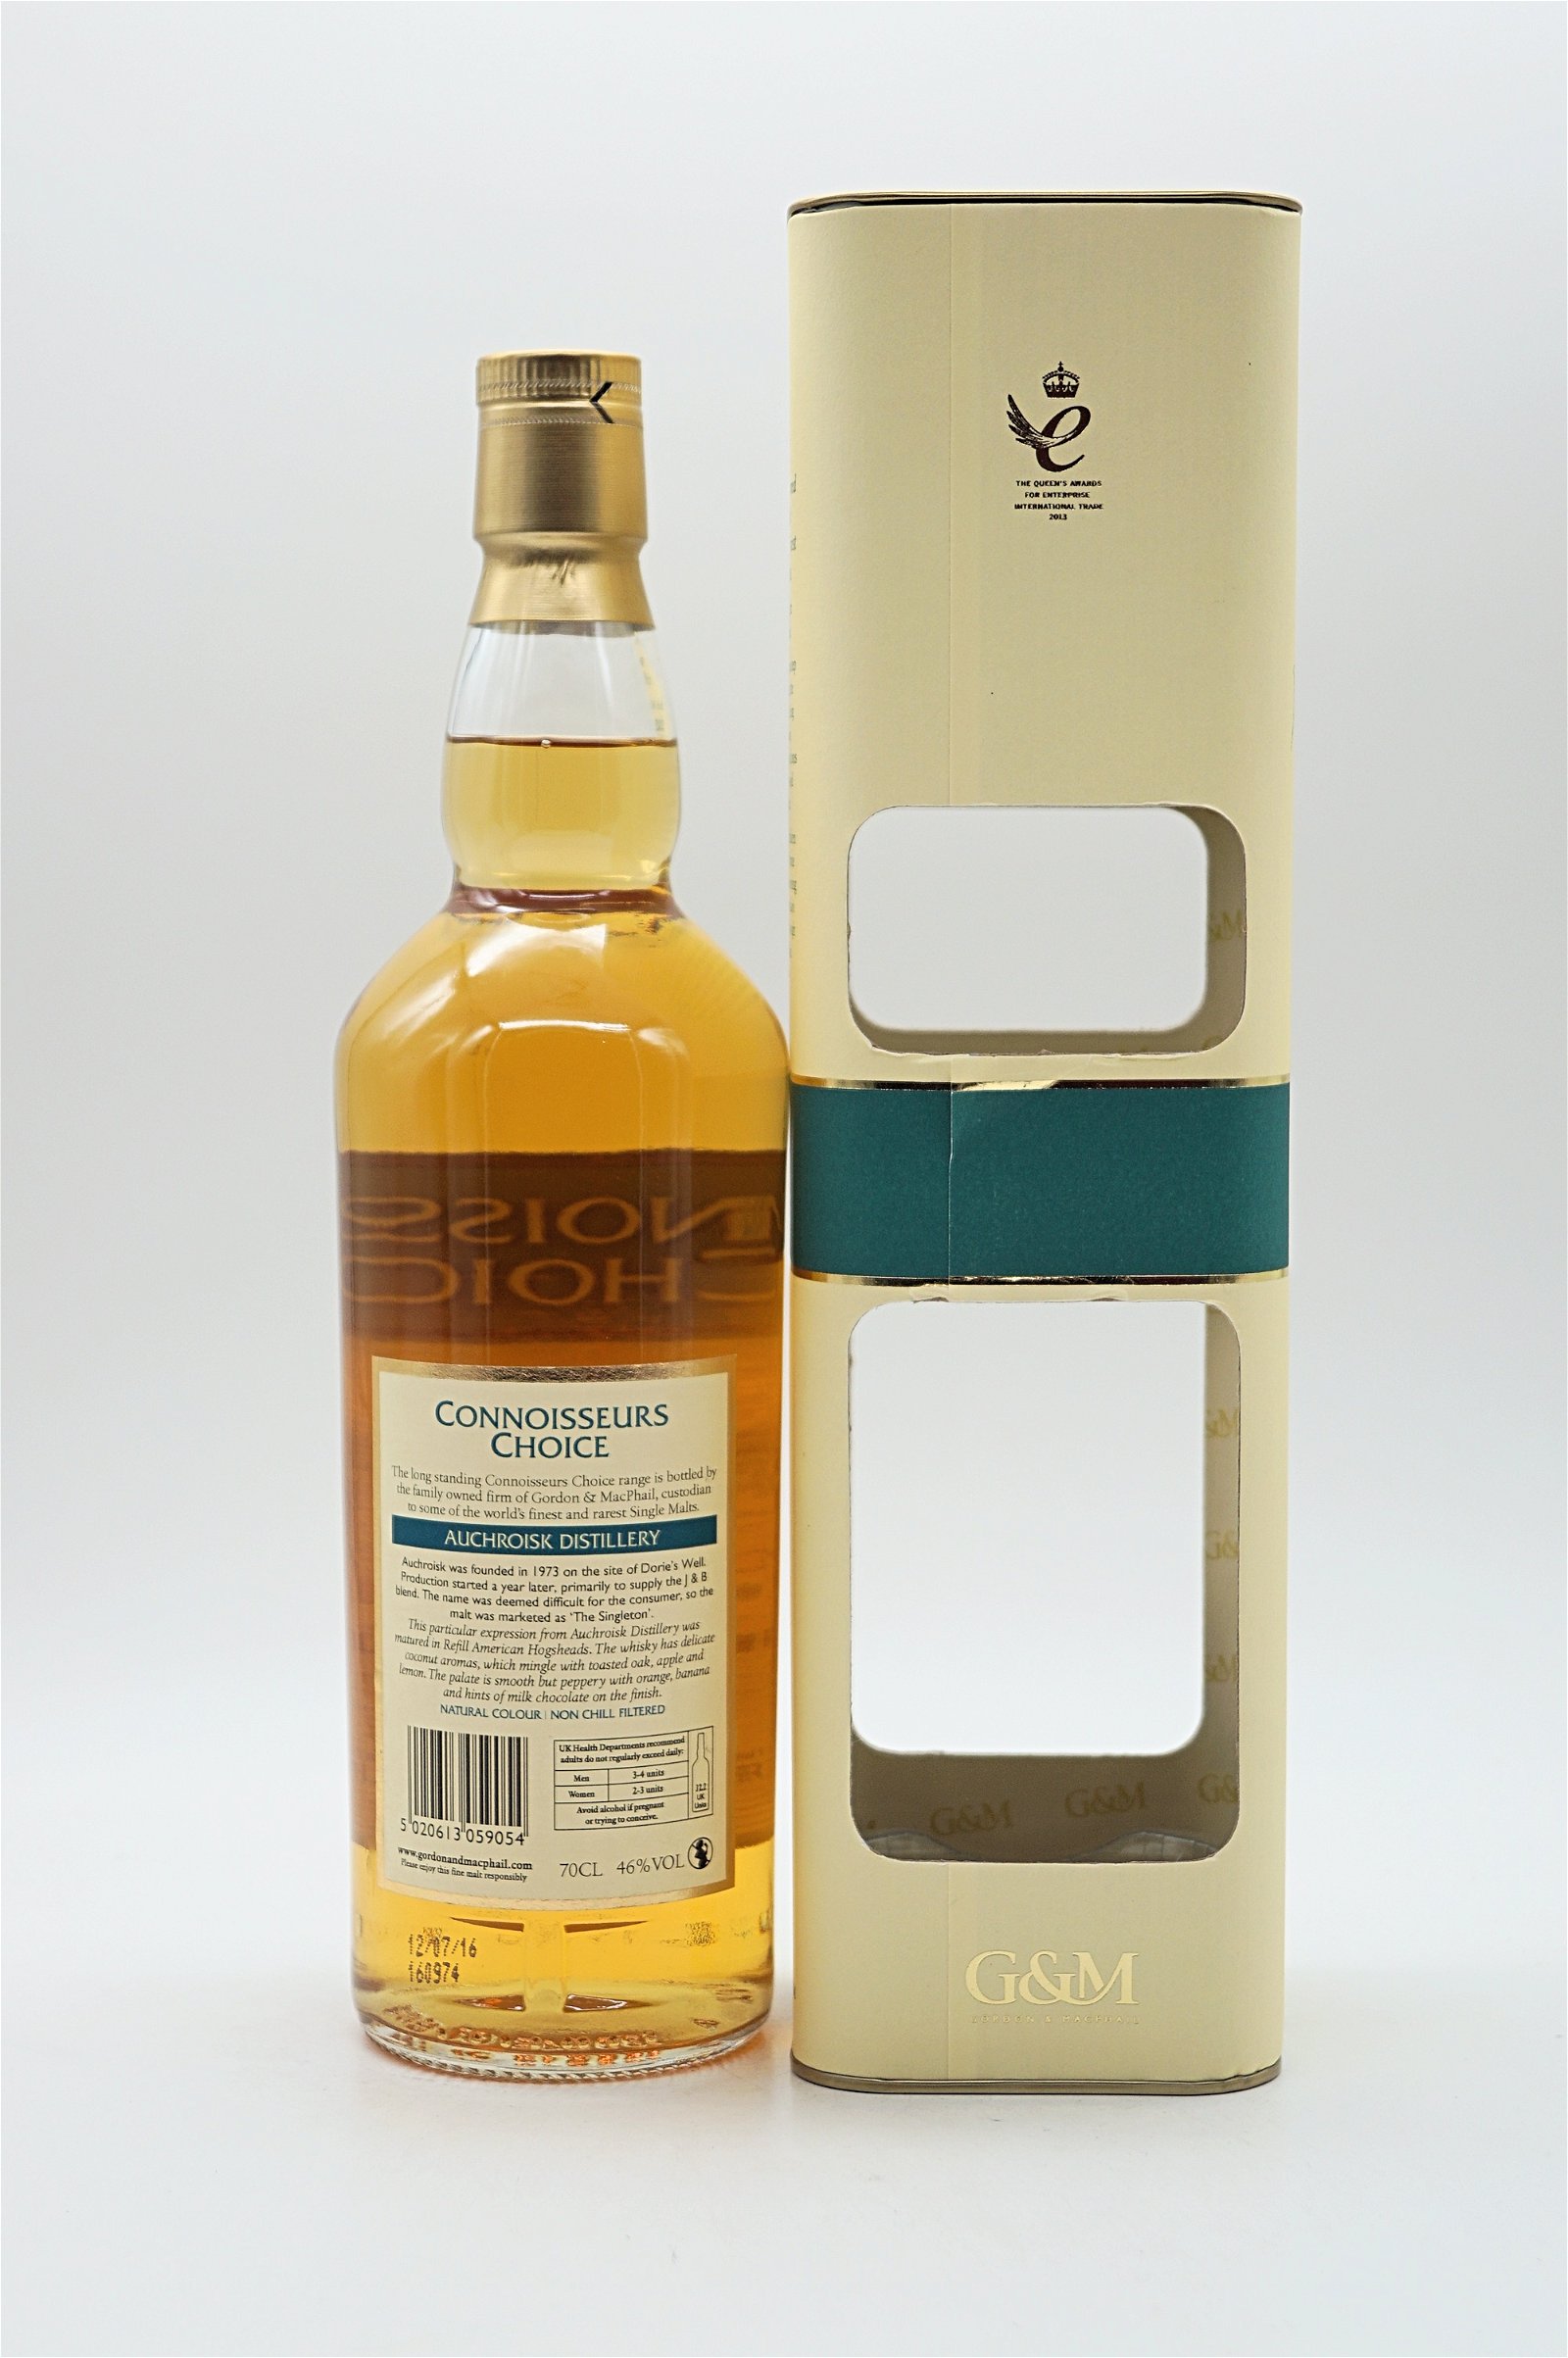 Gordon & Macphail Connoisseurs Choice Auchroisk 11 Jahre 2005/2016 Single Malt Scotch Whisky 